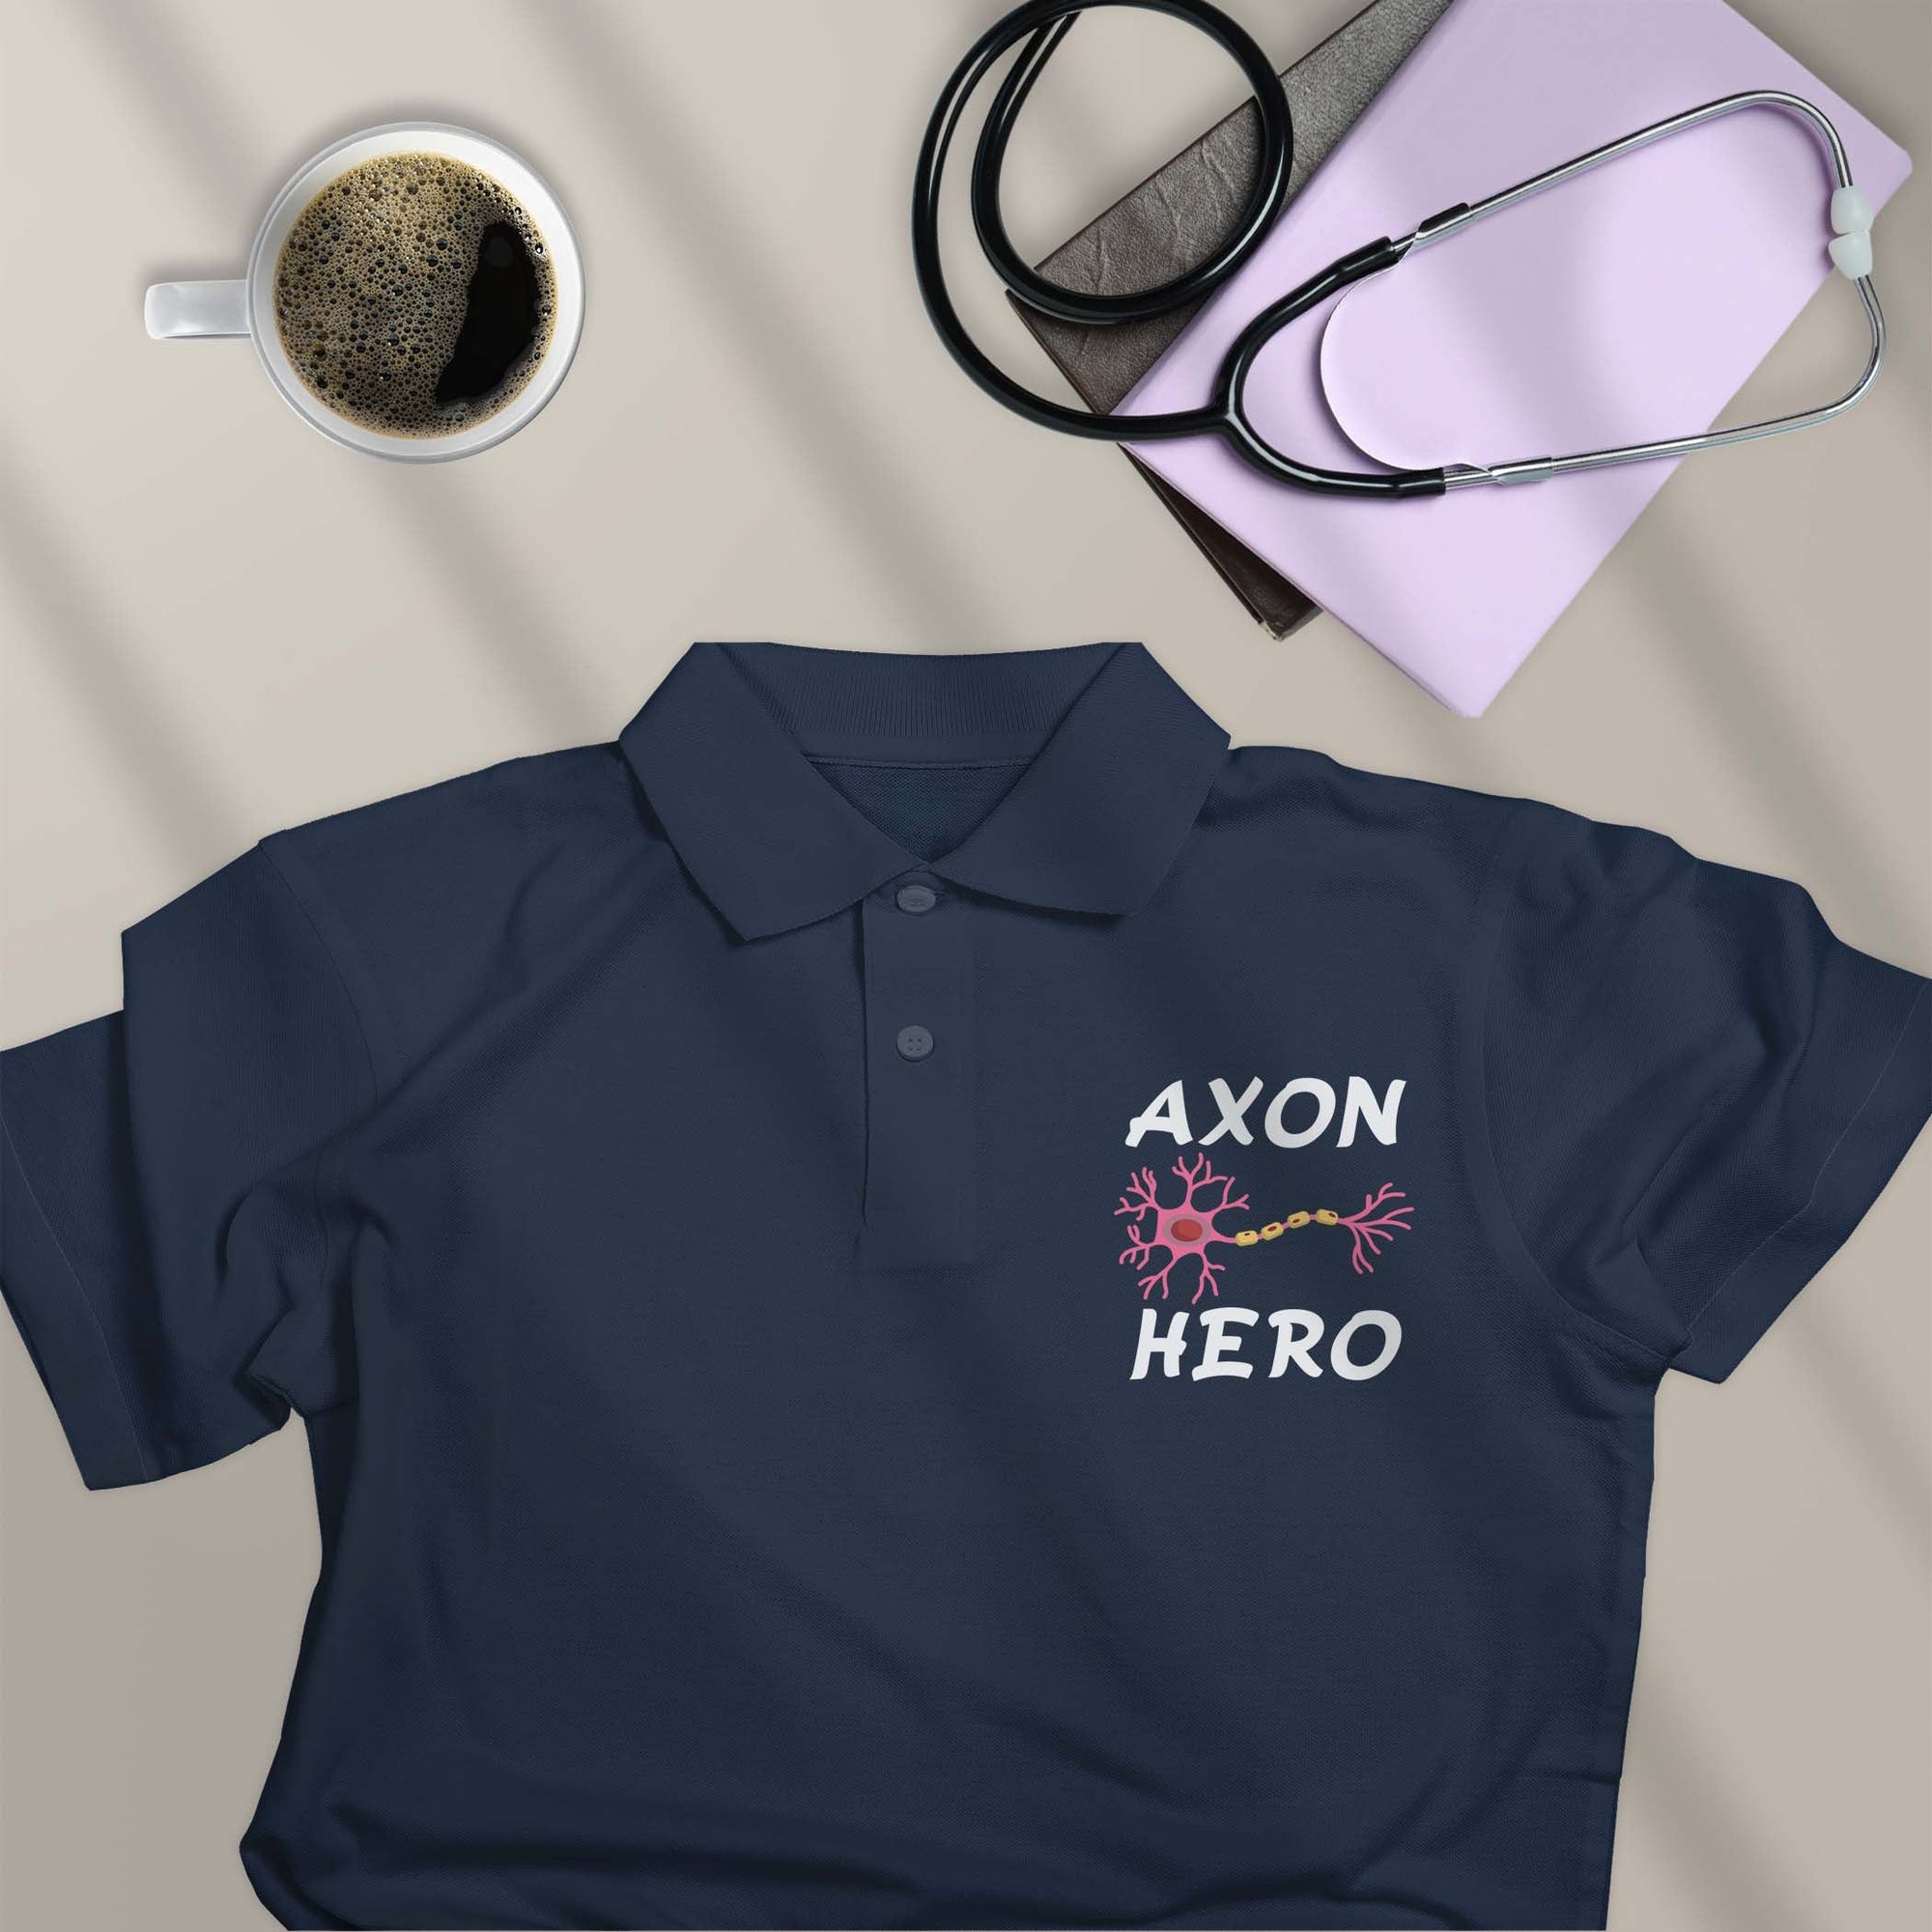 Axon Hero - Polo T-shirt For Neurologist